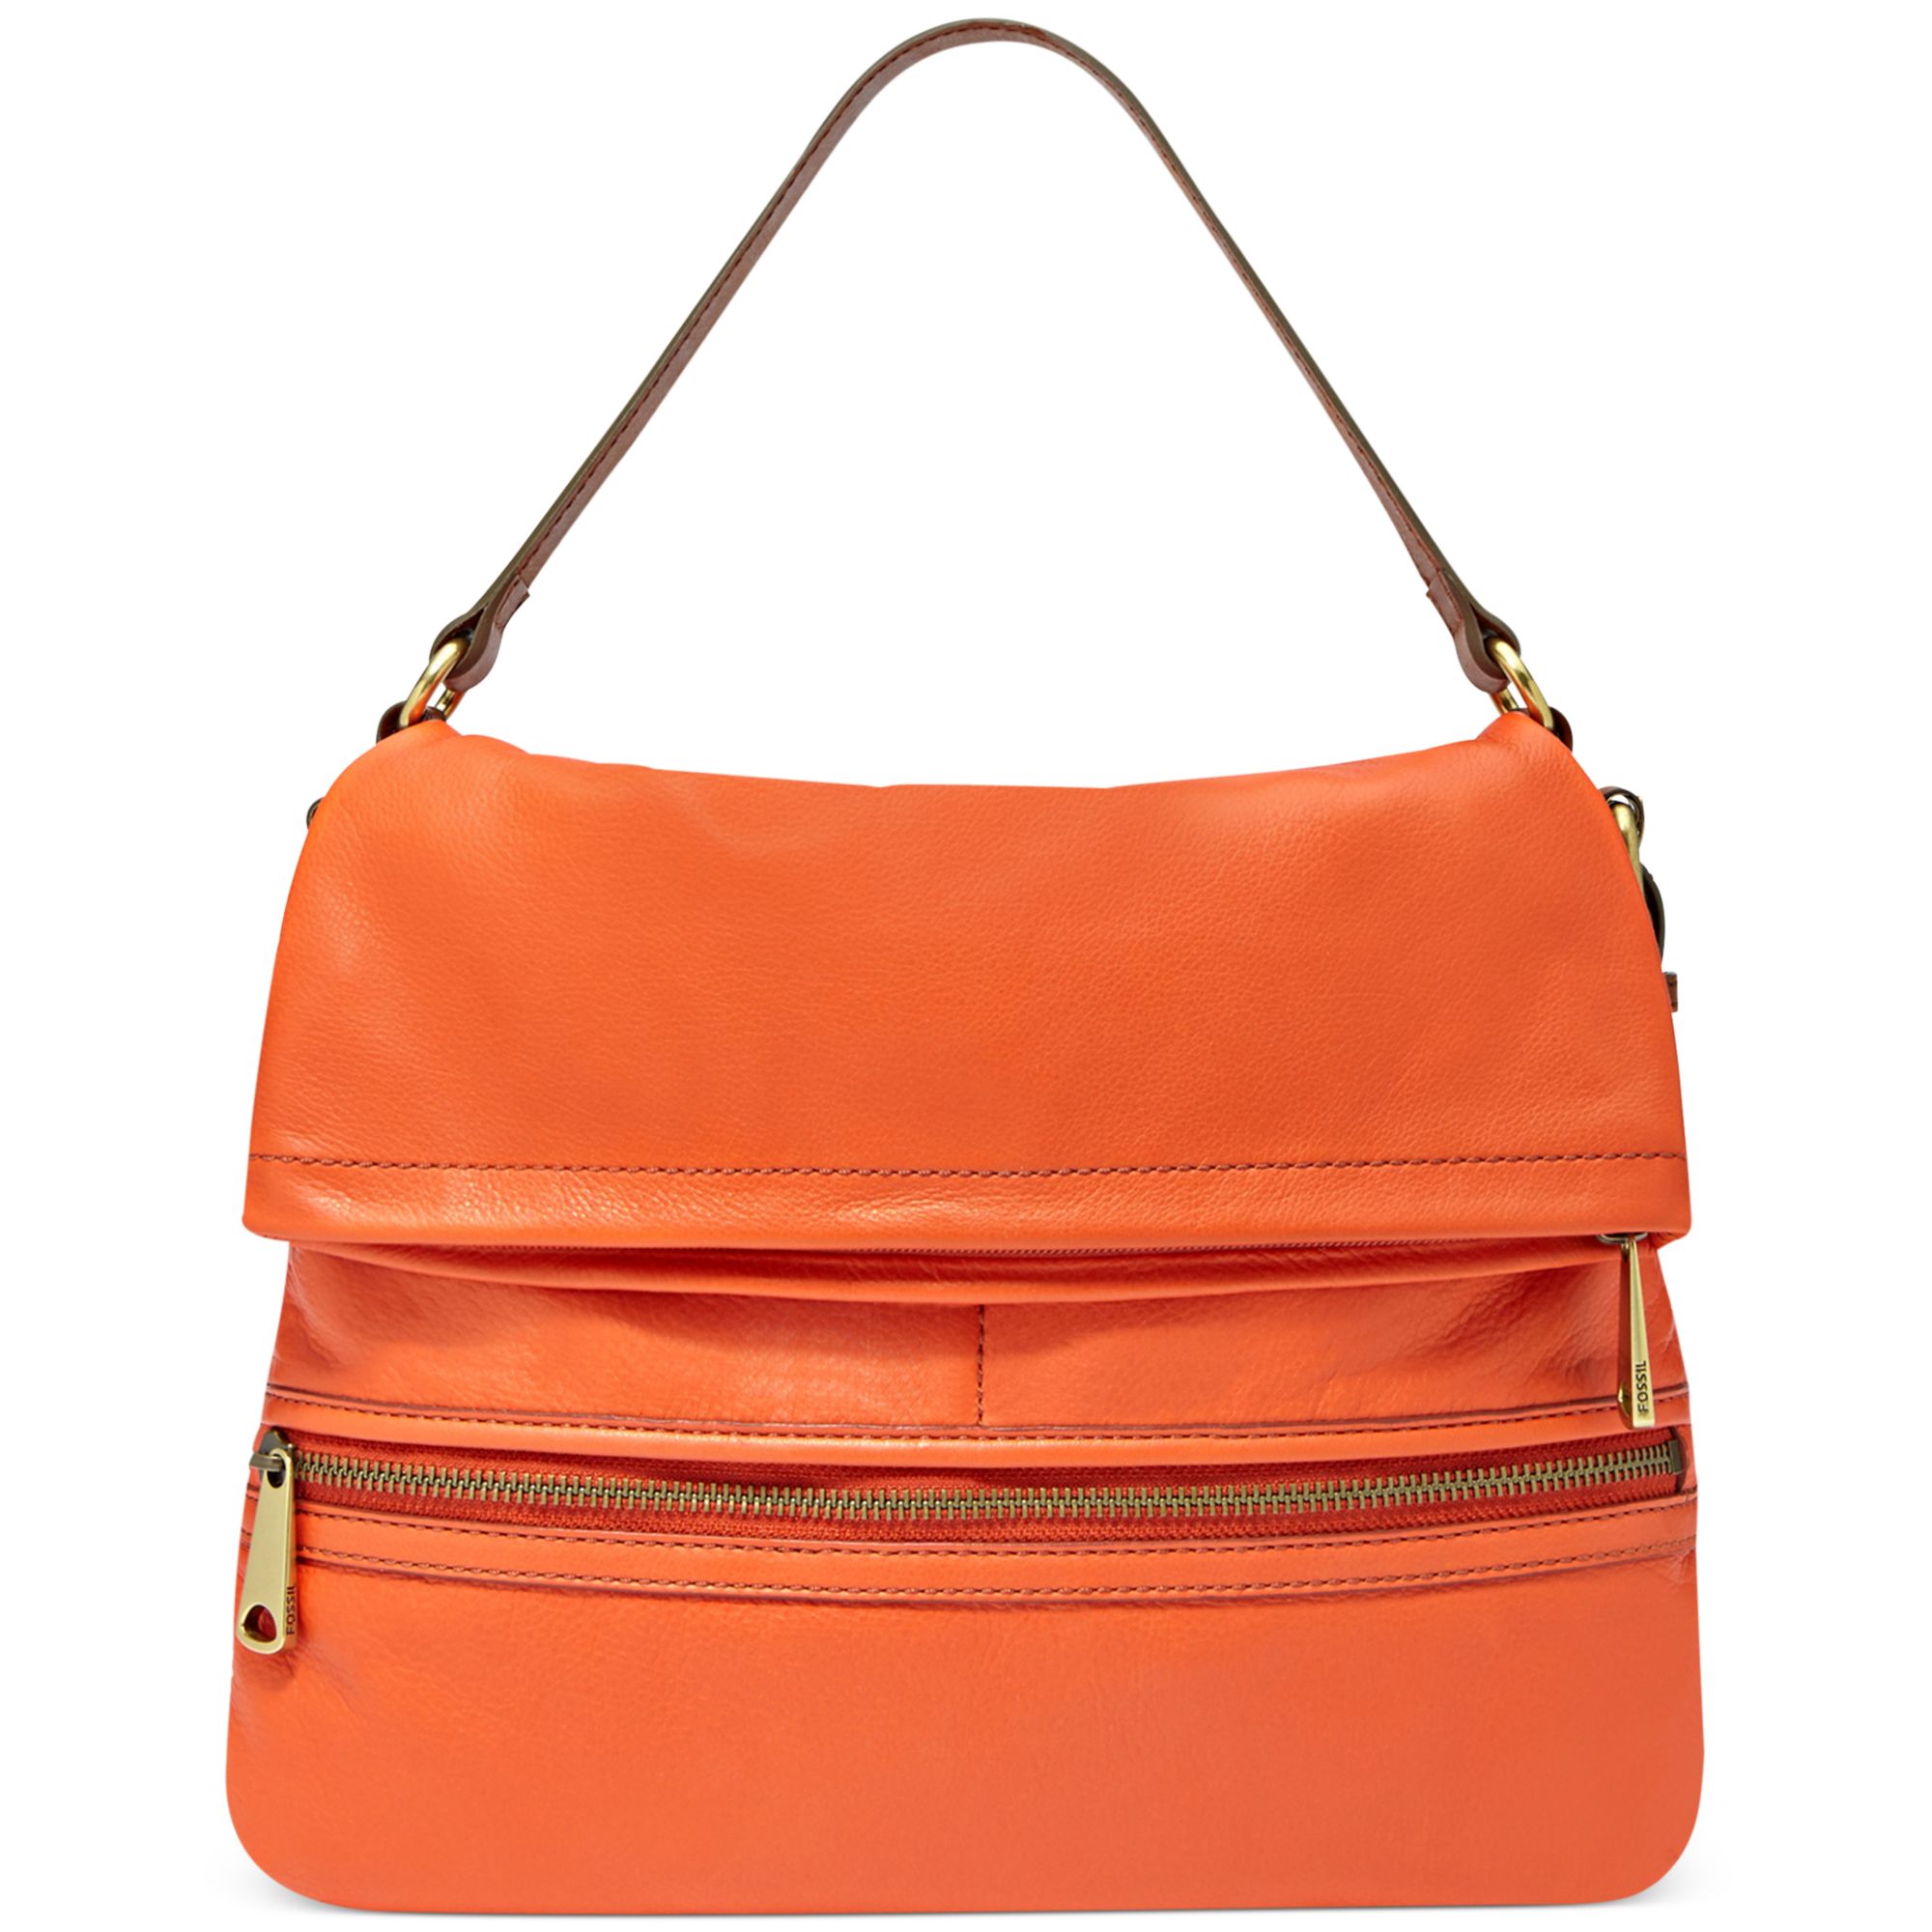 Fossil Explorer Leather Flap Bag in Orange (BRIGHT ORANGE) | Lyst